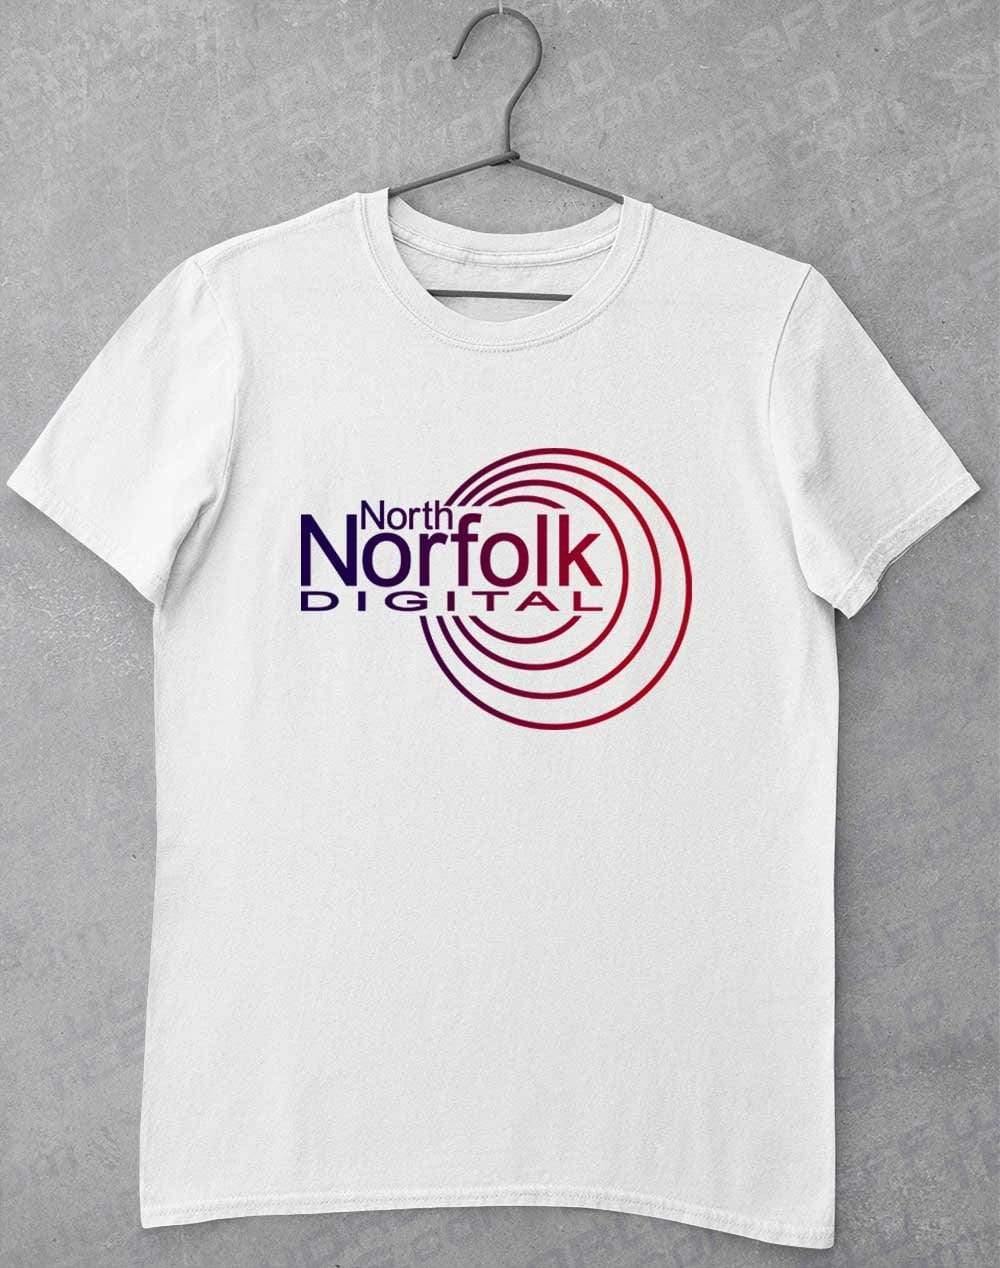 North Norfolk Digital T-Shirt S / White  - Off World Tees